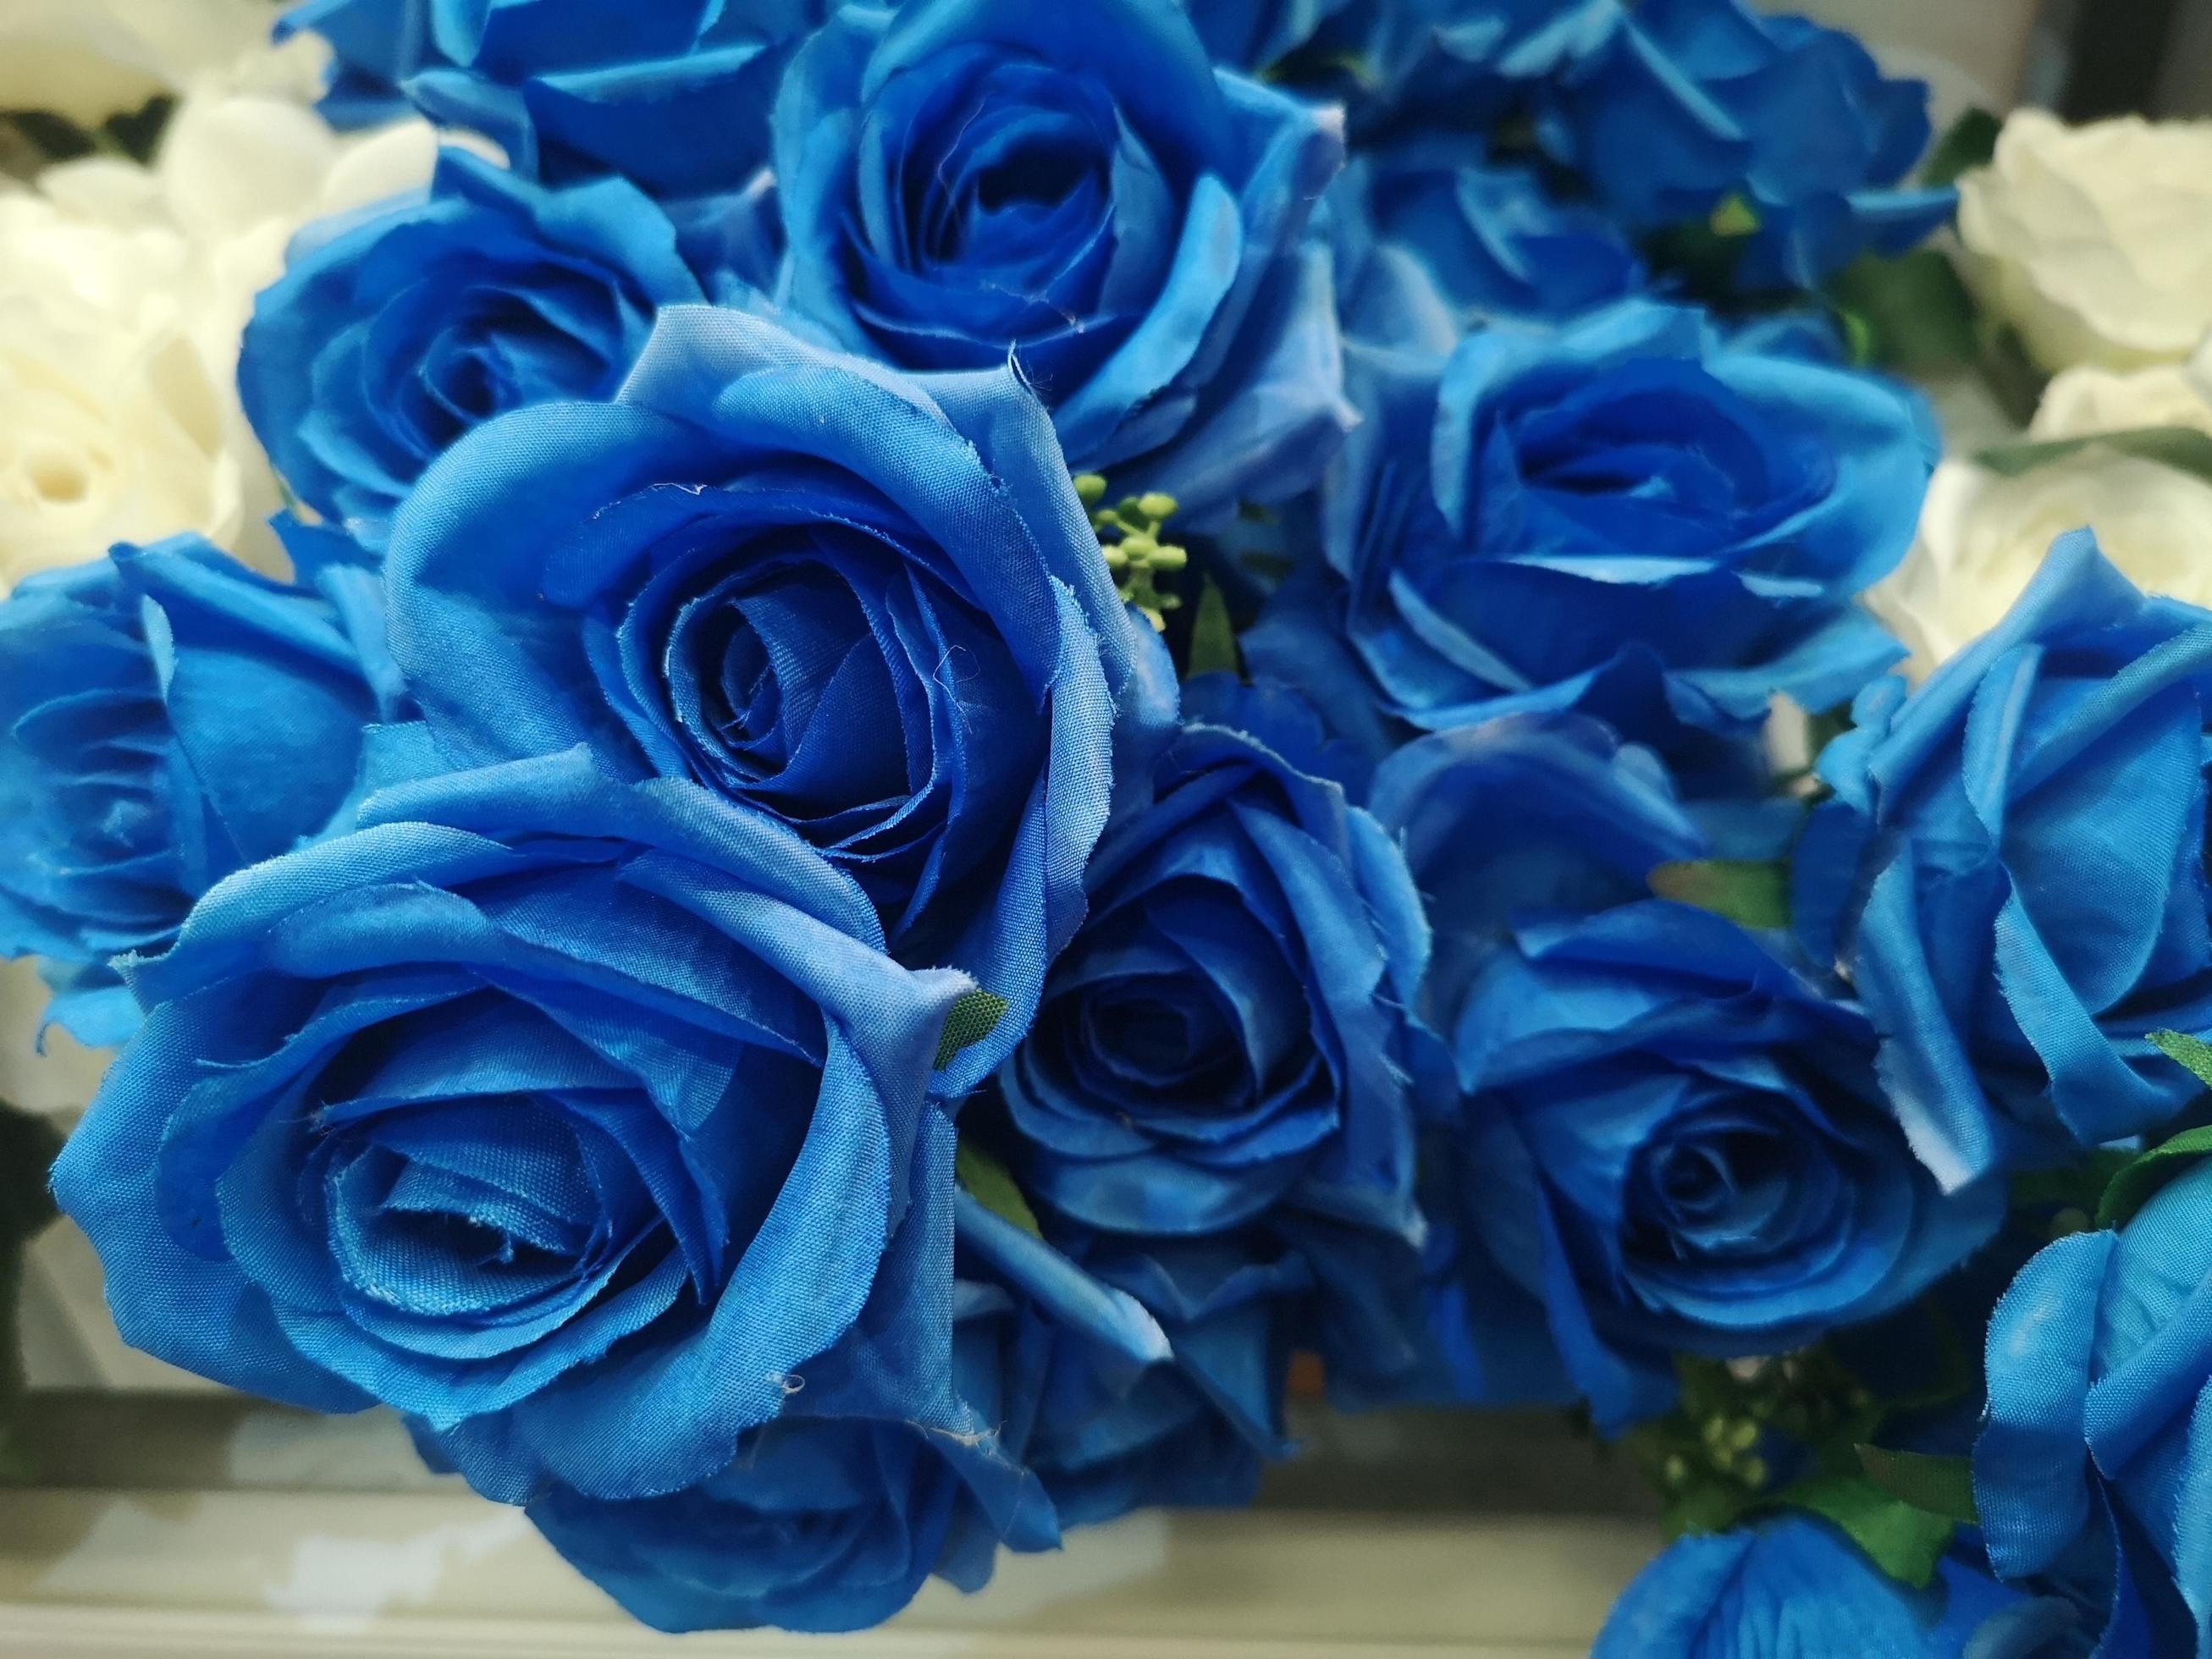 rosa azul oscuro hecho a mano hermoso ramo artificial flores decoración  fondo ornamental para tarjeta de felicitación o evento de celebración  diseño retro, hecho de tela y plástico, día de san valentín